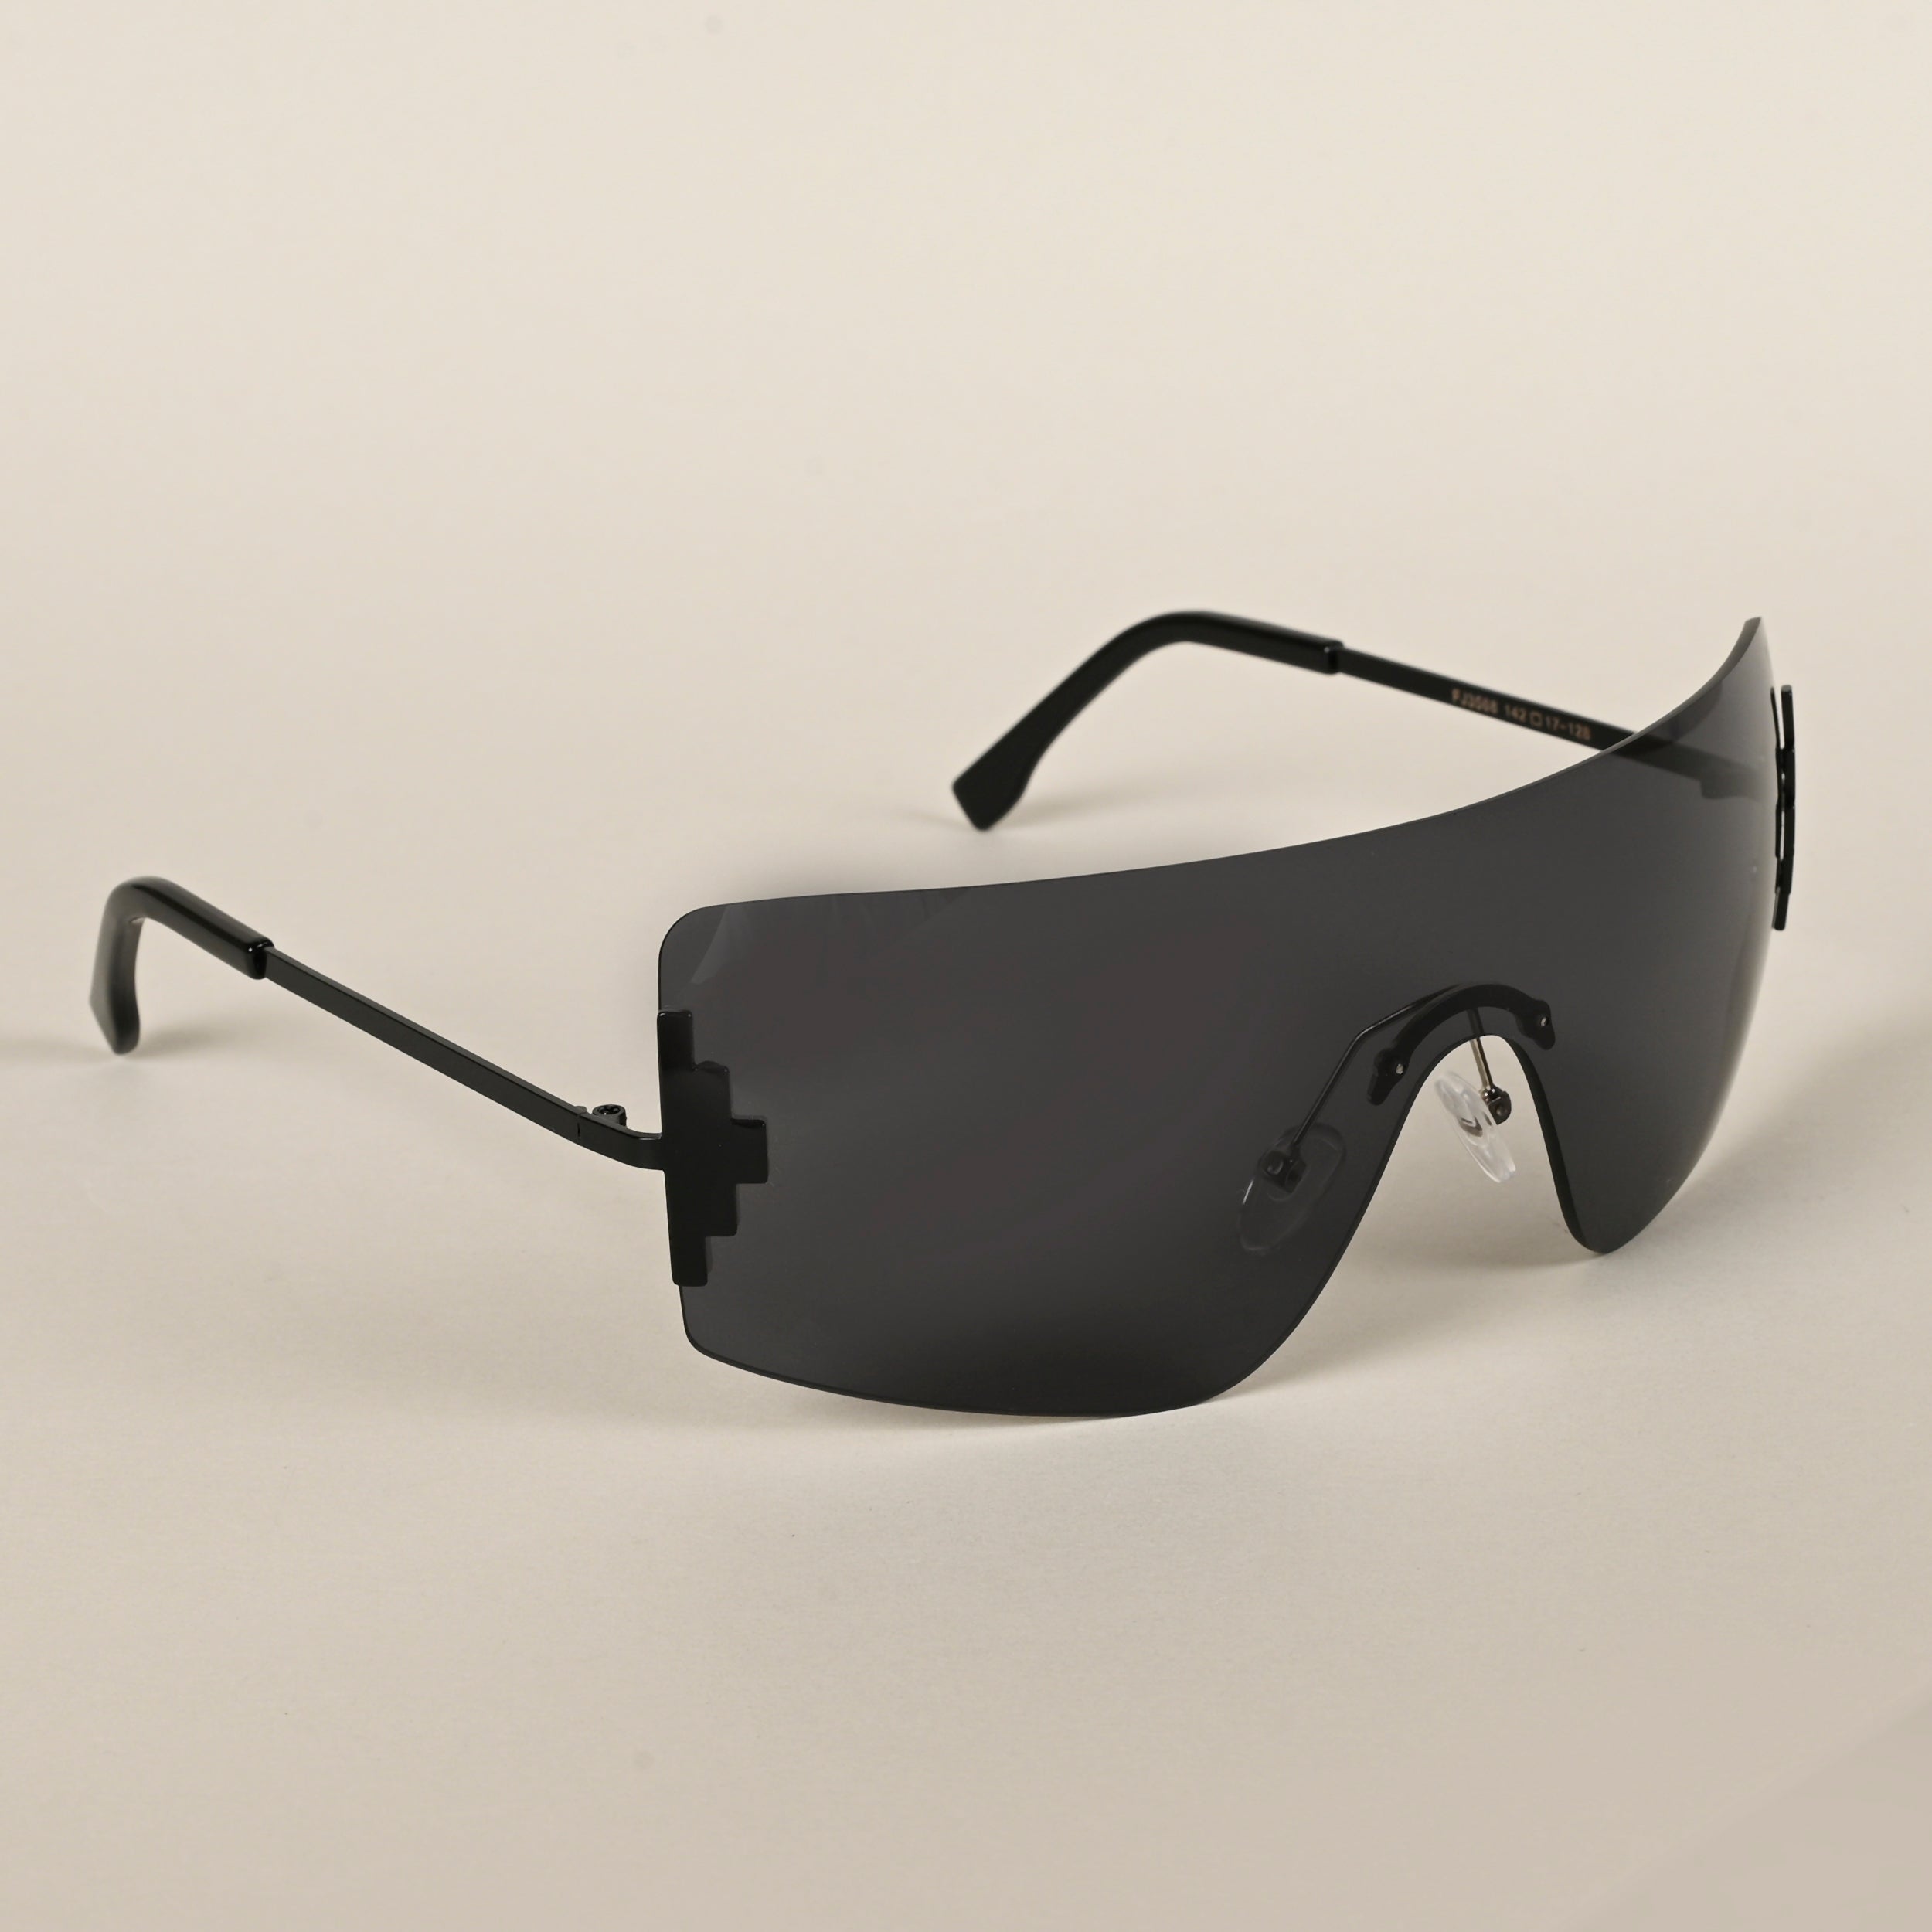 Voyage Black Wrap Around Sunglasses for Men & Women (3568MG4115)